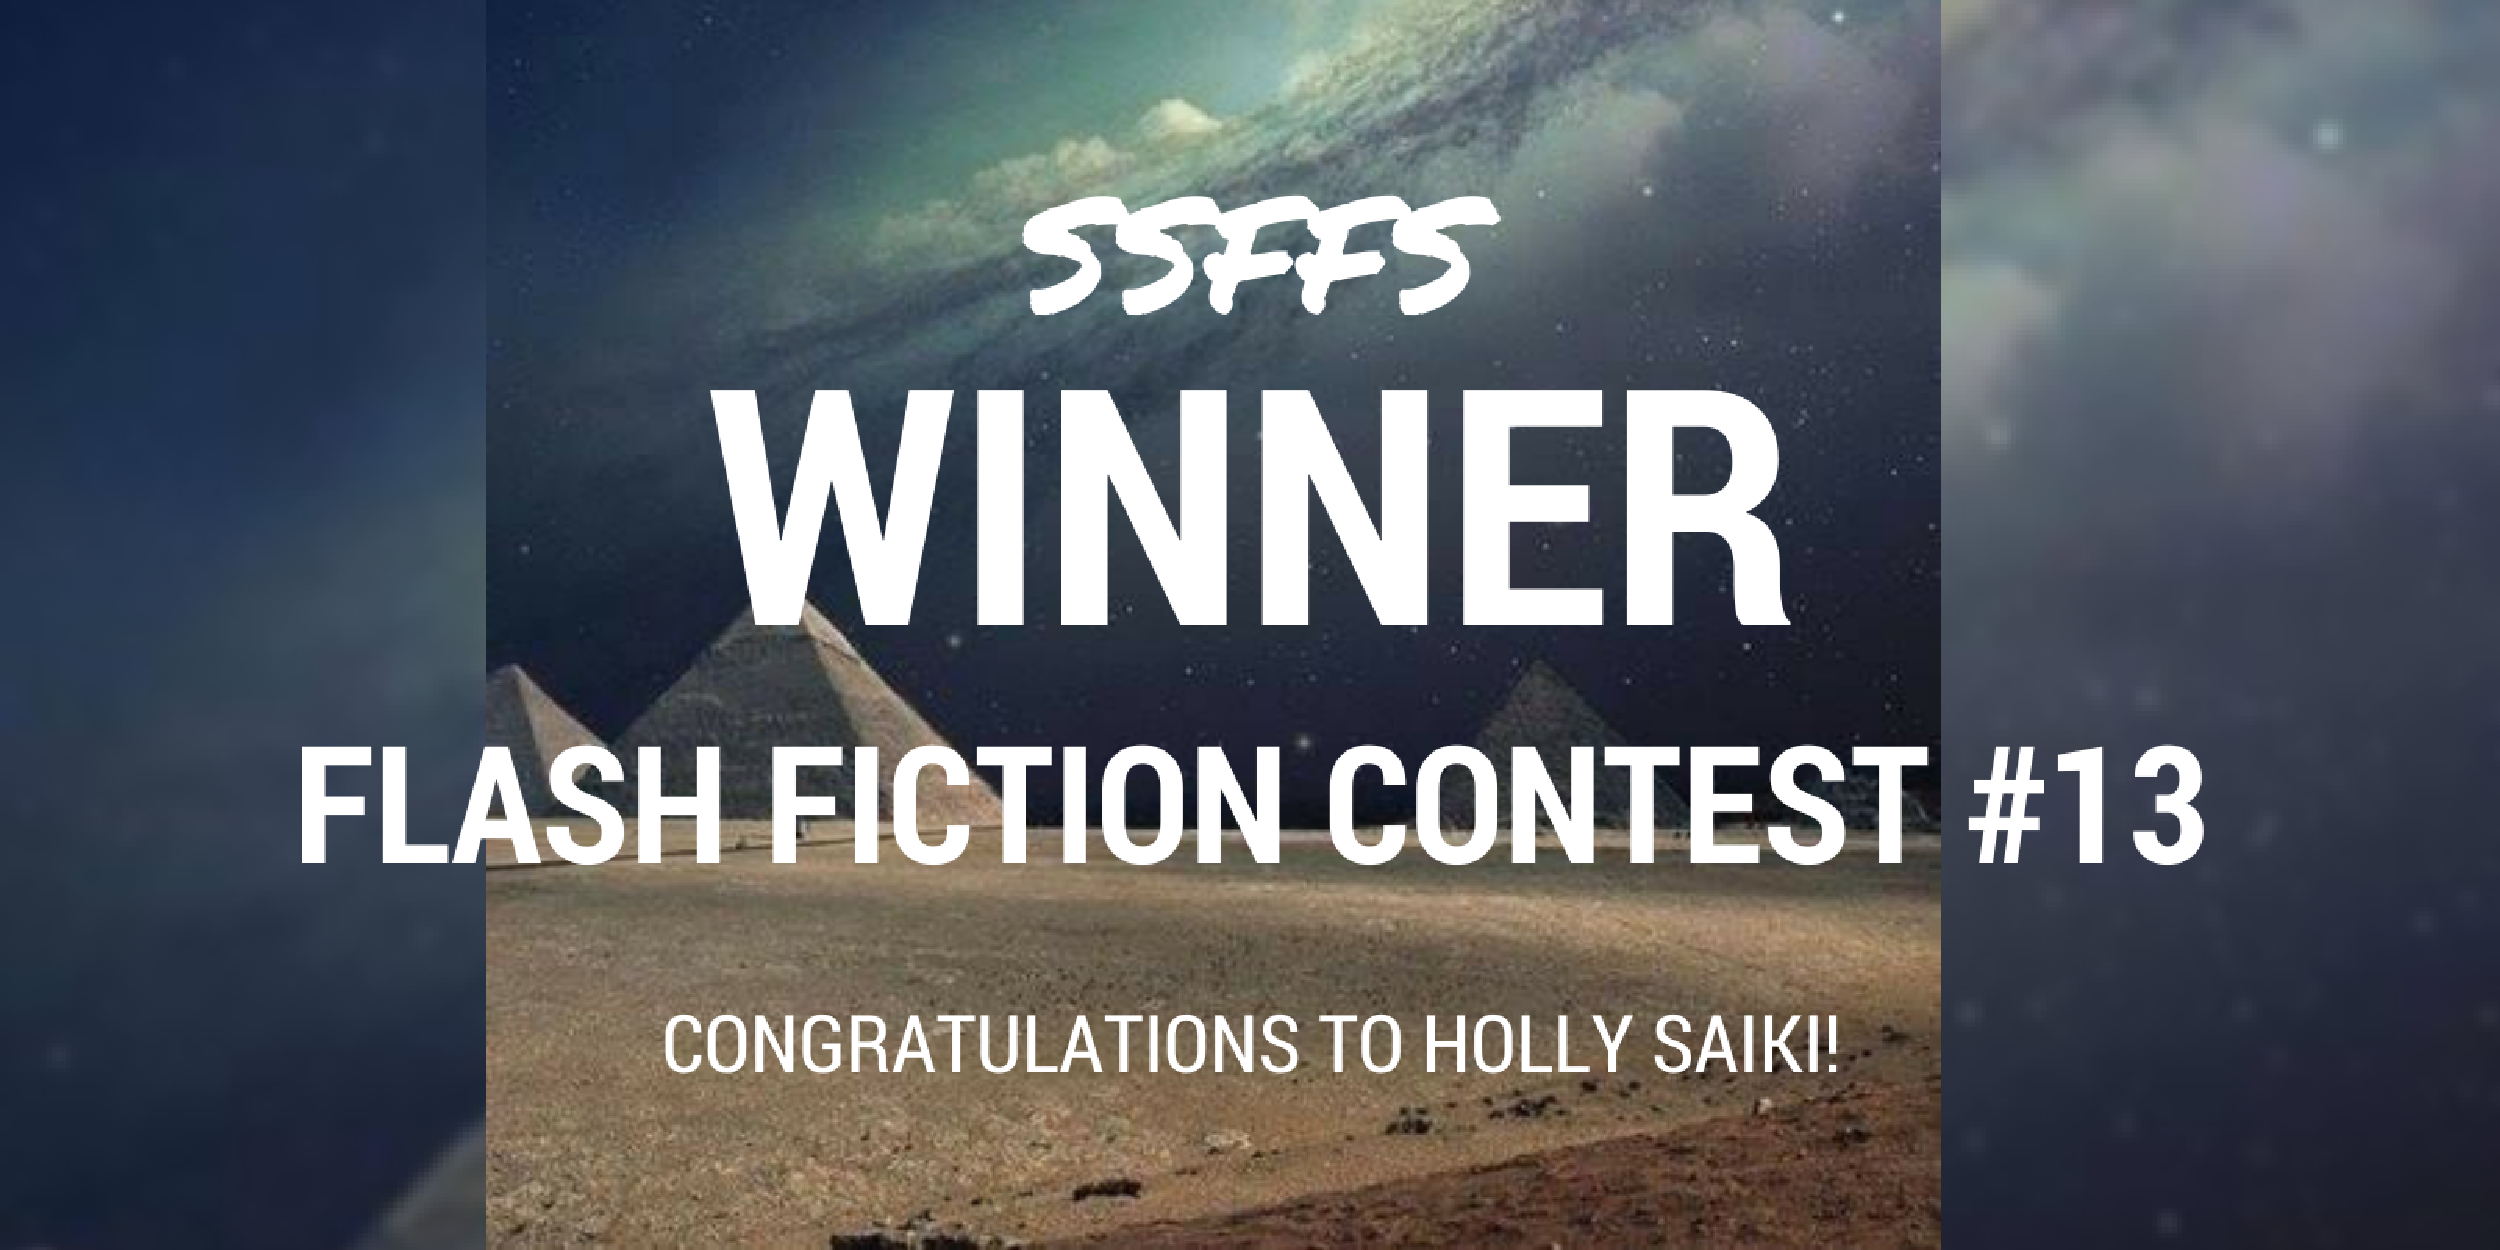 winner-ssffs-flash-fiction-contest-13